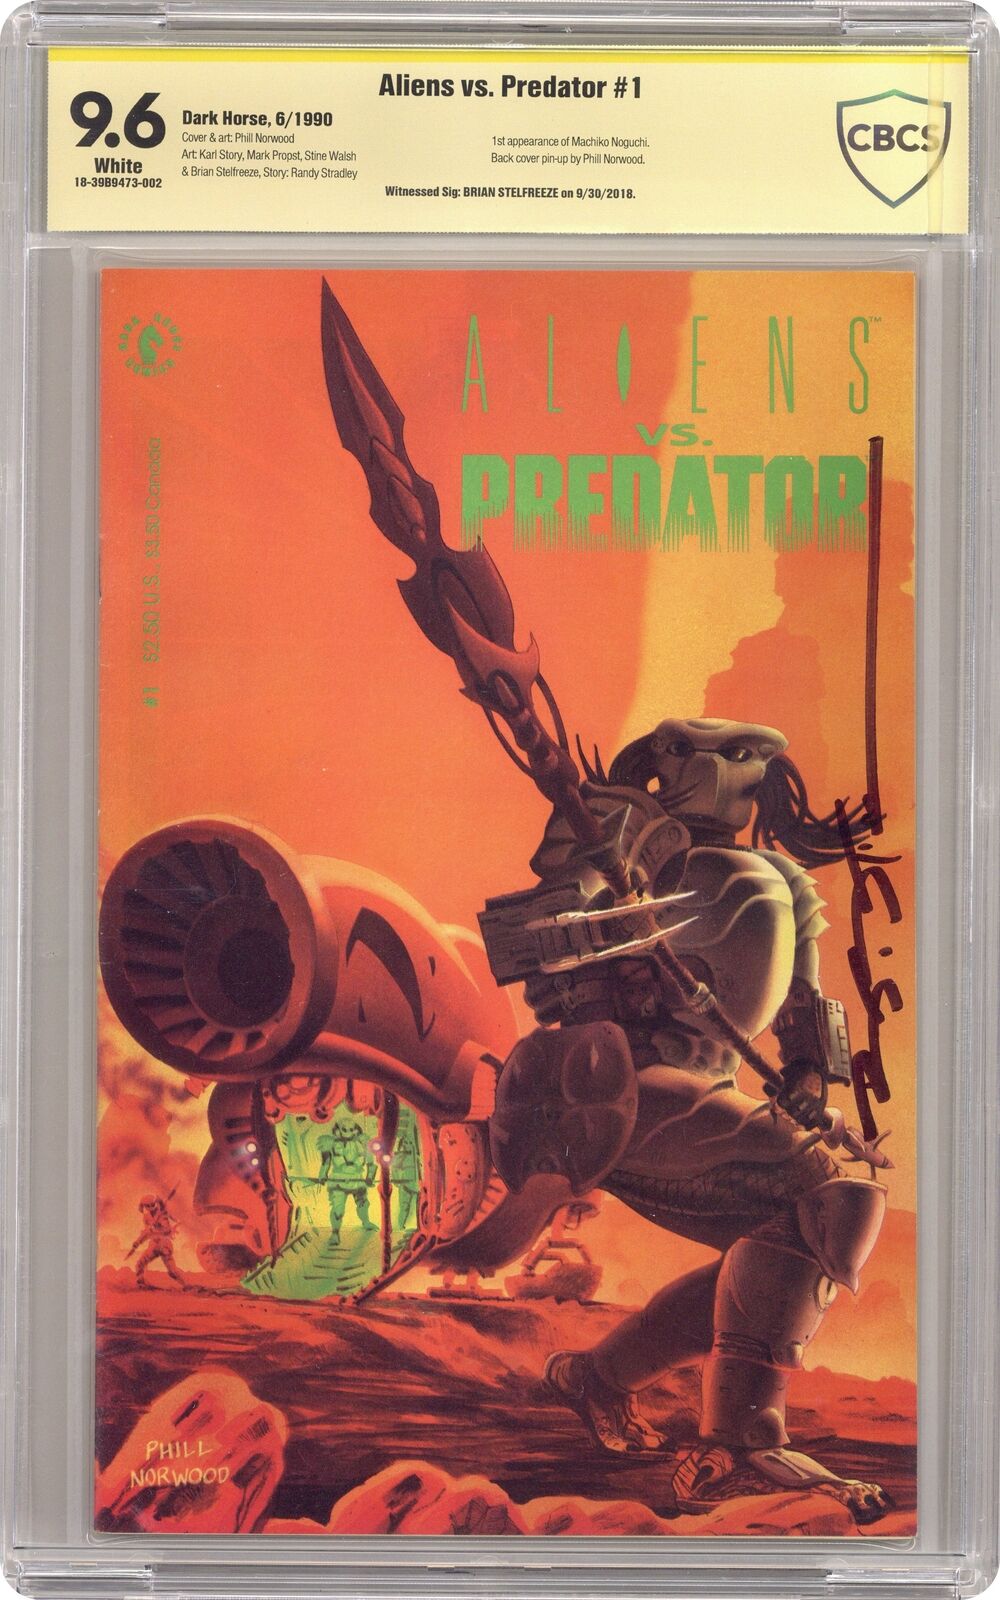 Aliens vs. Predator #1 CBCS 9.6 Signed Brian Stelfreeze 1990 18-39B9473-002